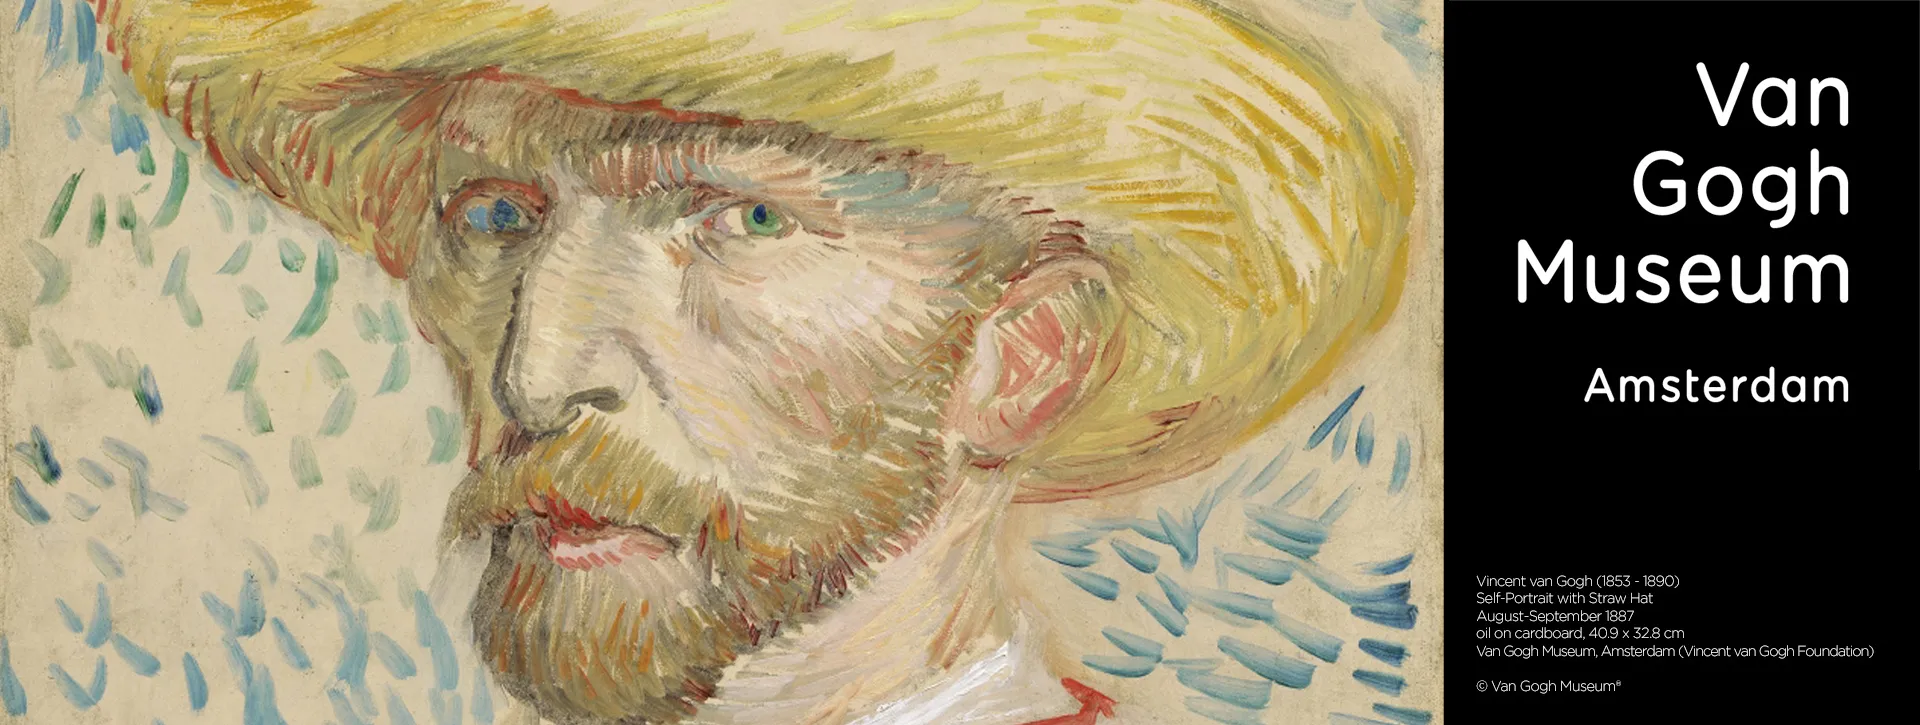 Vincent van Gogh (1853 - 1890), Self-Portrait with Straw Hat, August-September 1887, oil on cardboard, 40.9 x 32.8 cm, Van Gogh Museum, Amsterdam (Vincent van Gogh Foundation), © Van Gogh Museum® 